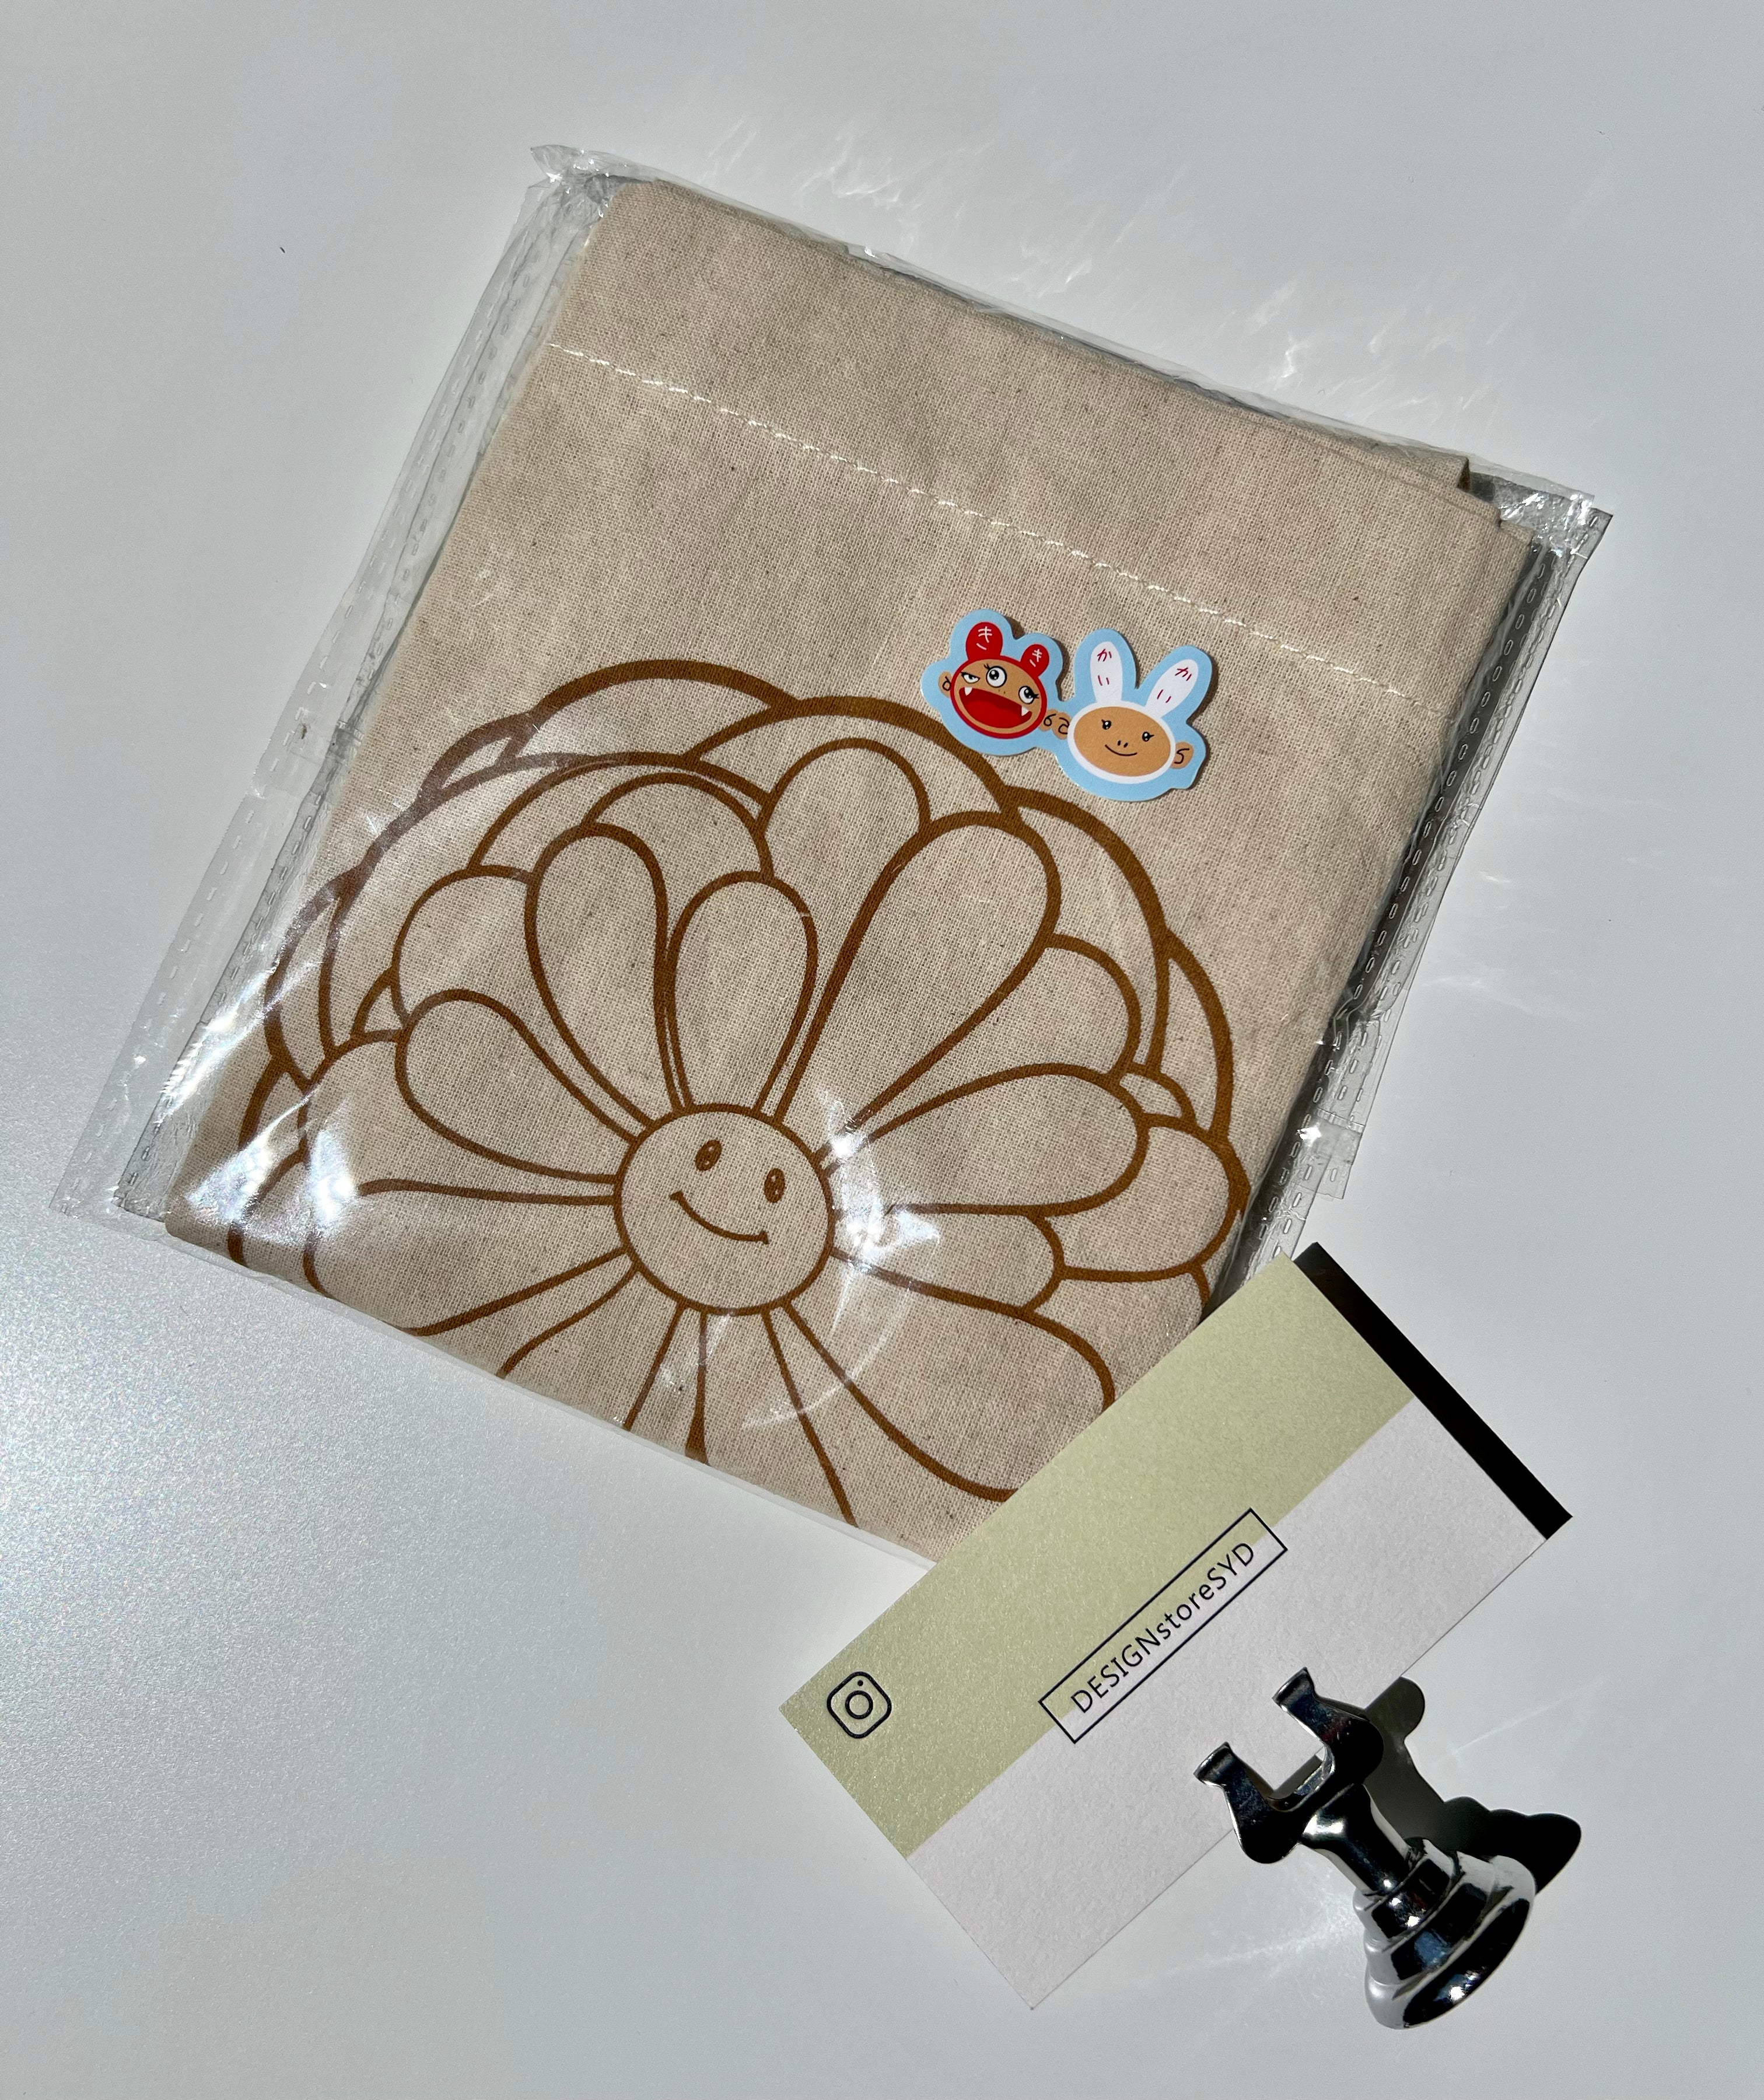 takashi murakami flower Tote Bag for Sale by jam jam